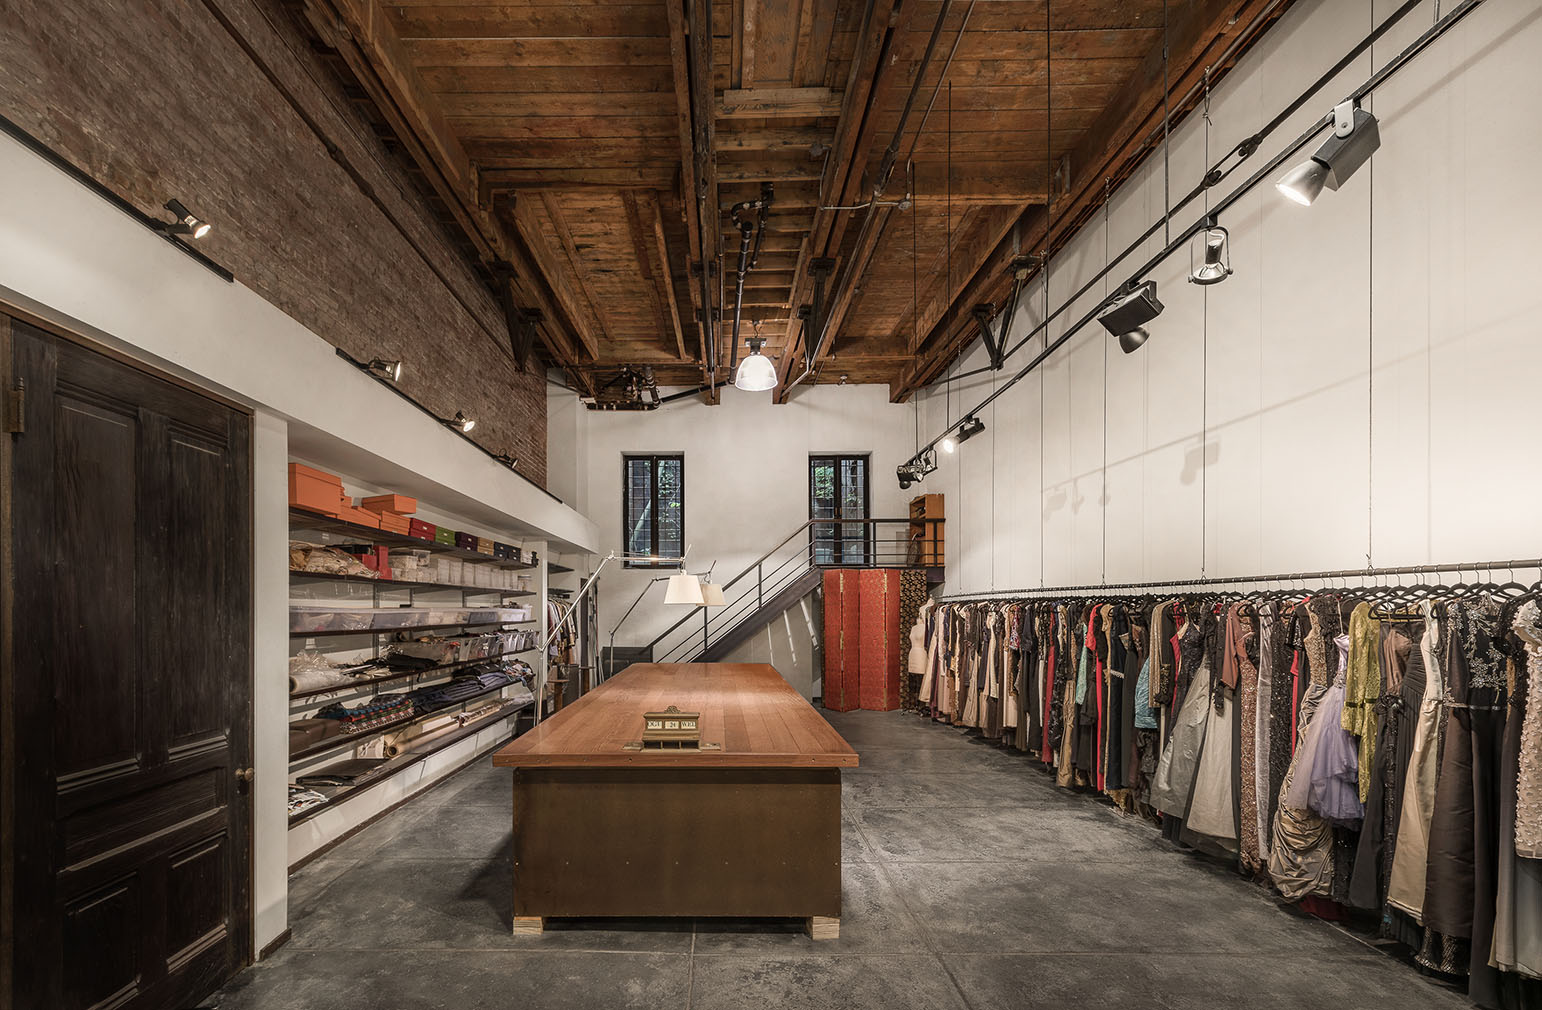 A set designer’s warehouse studio is for sale in Manhattan